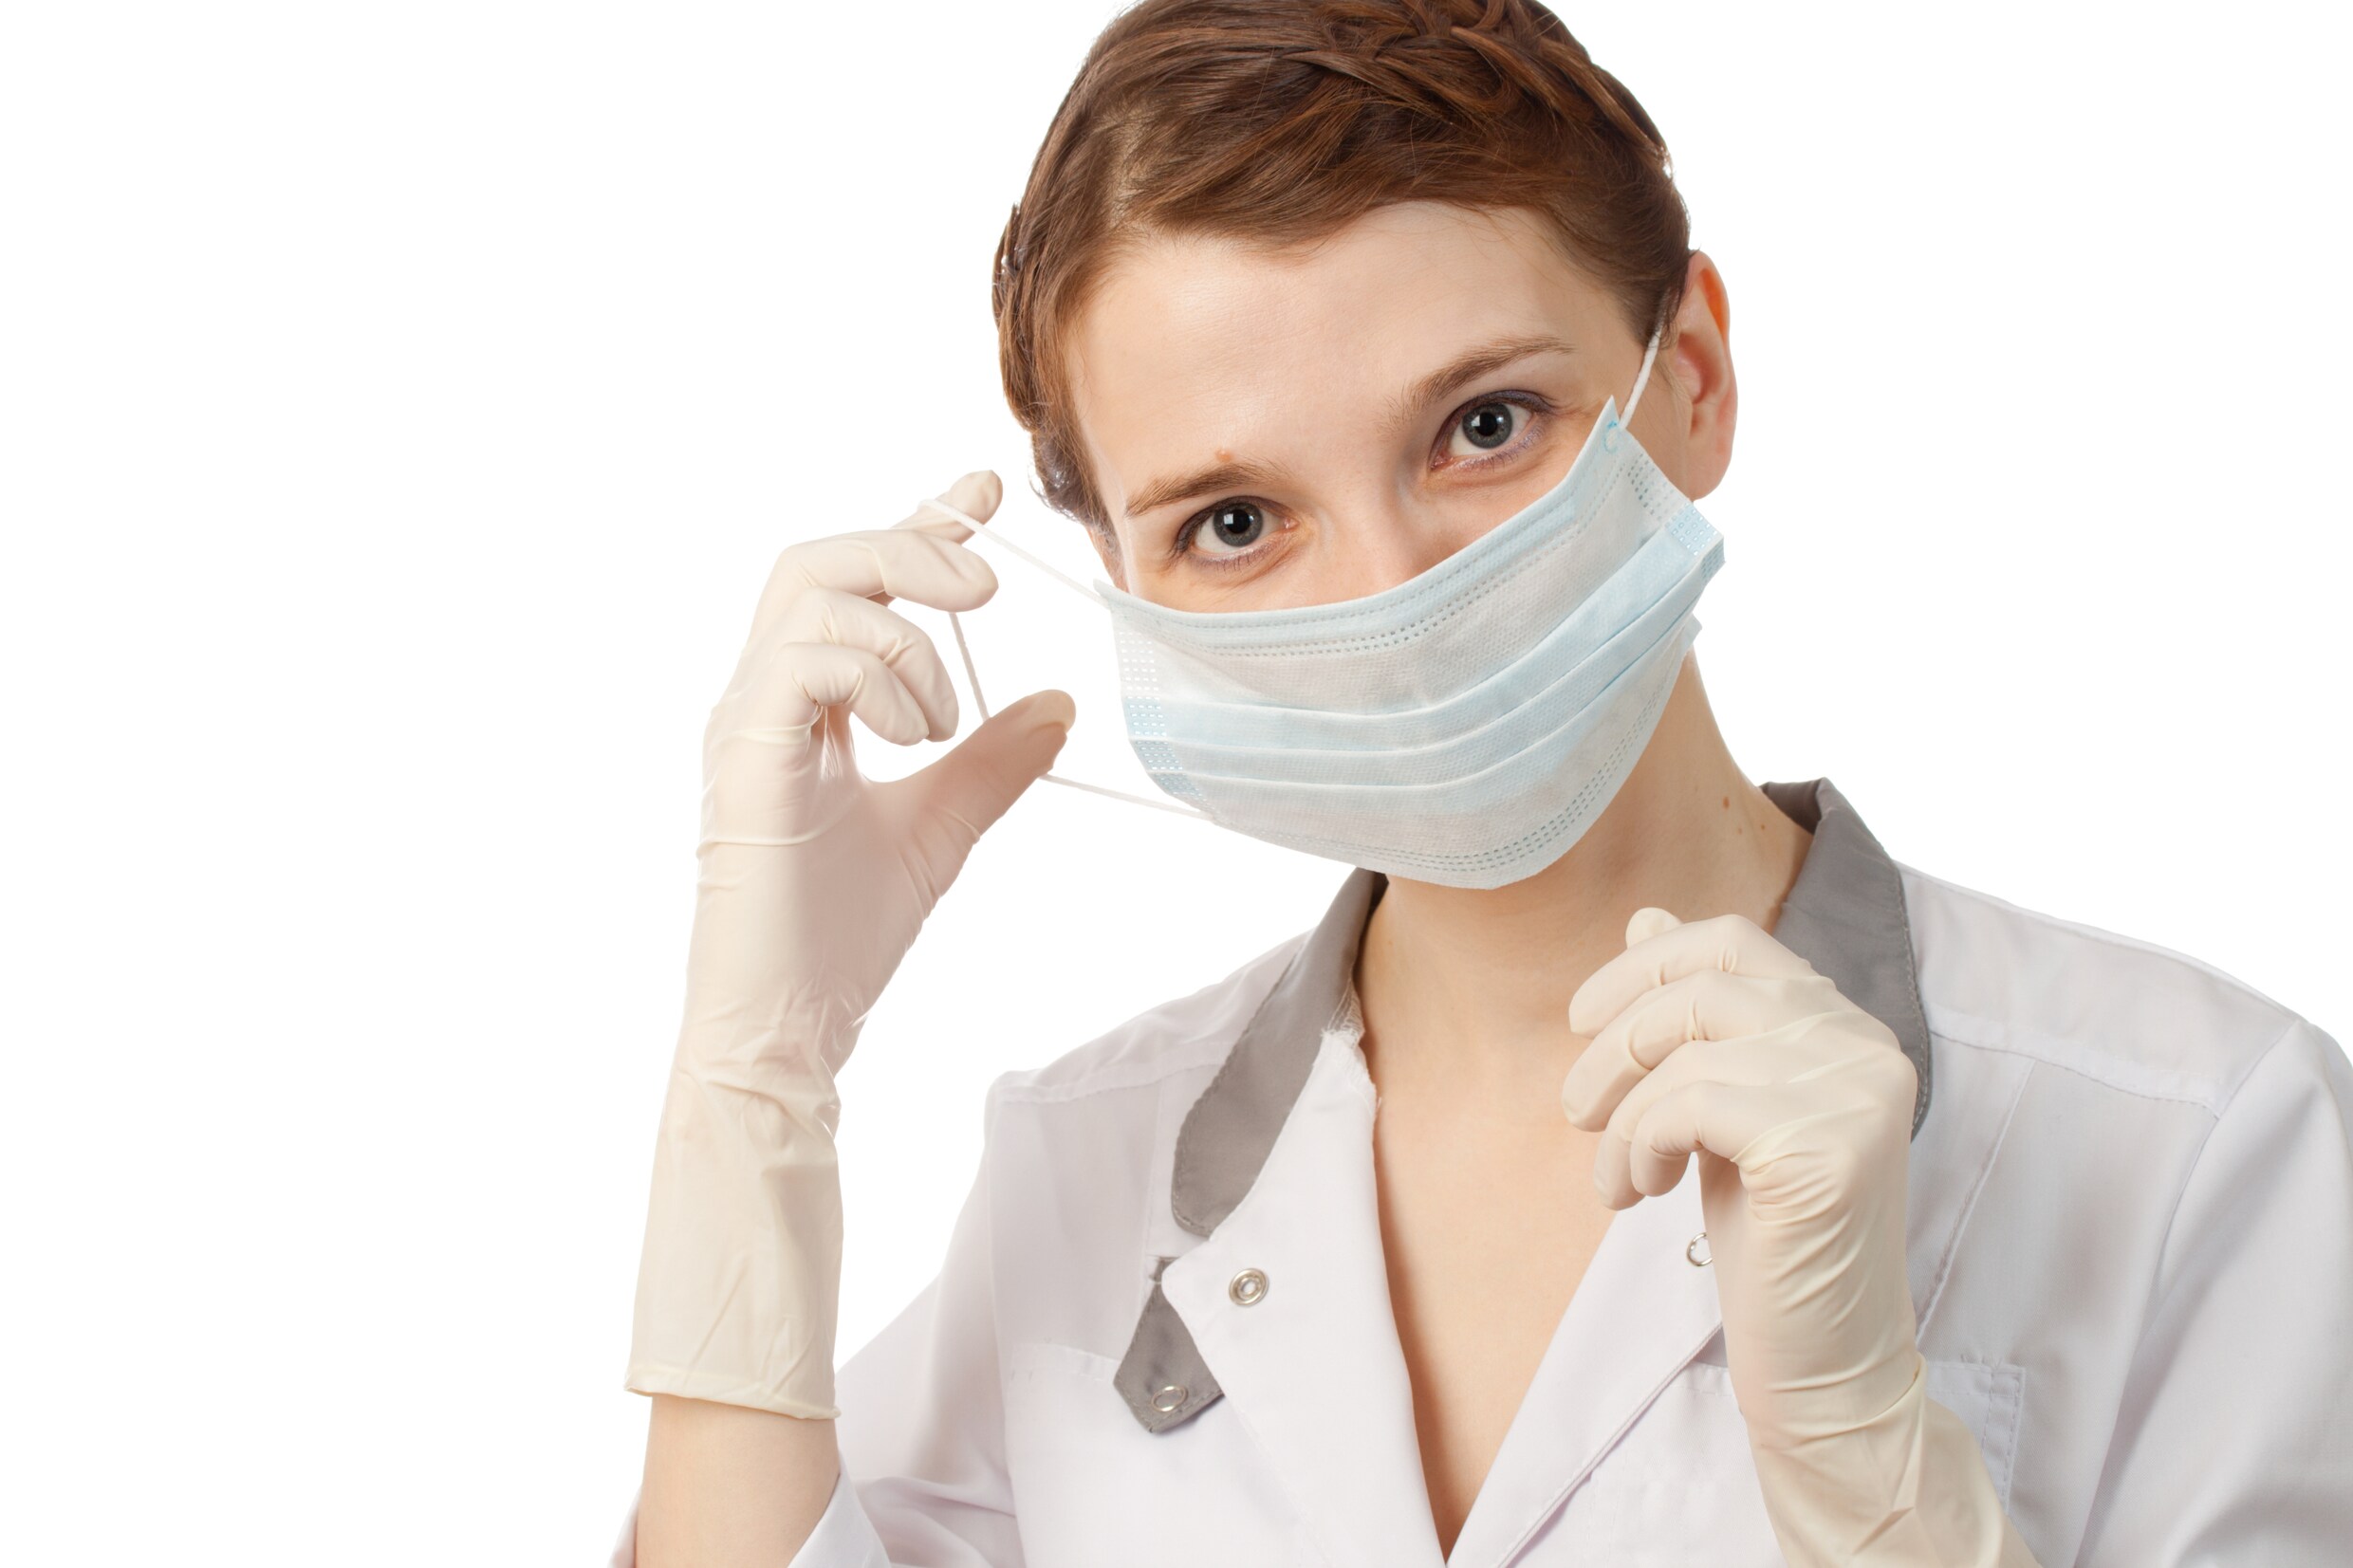 Verpleegkundigen in verzorgingstehuizen moeten ‘murmel murmel’ roepen om mondkapje na te bootsen